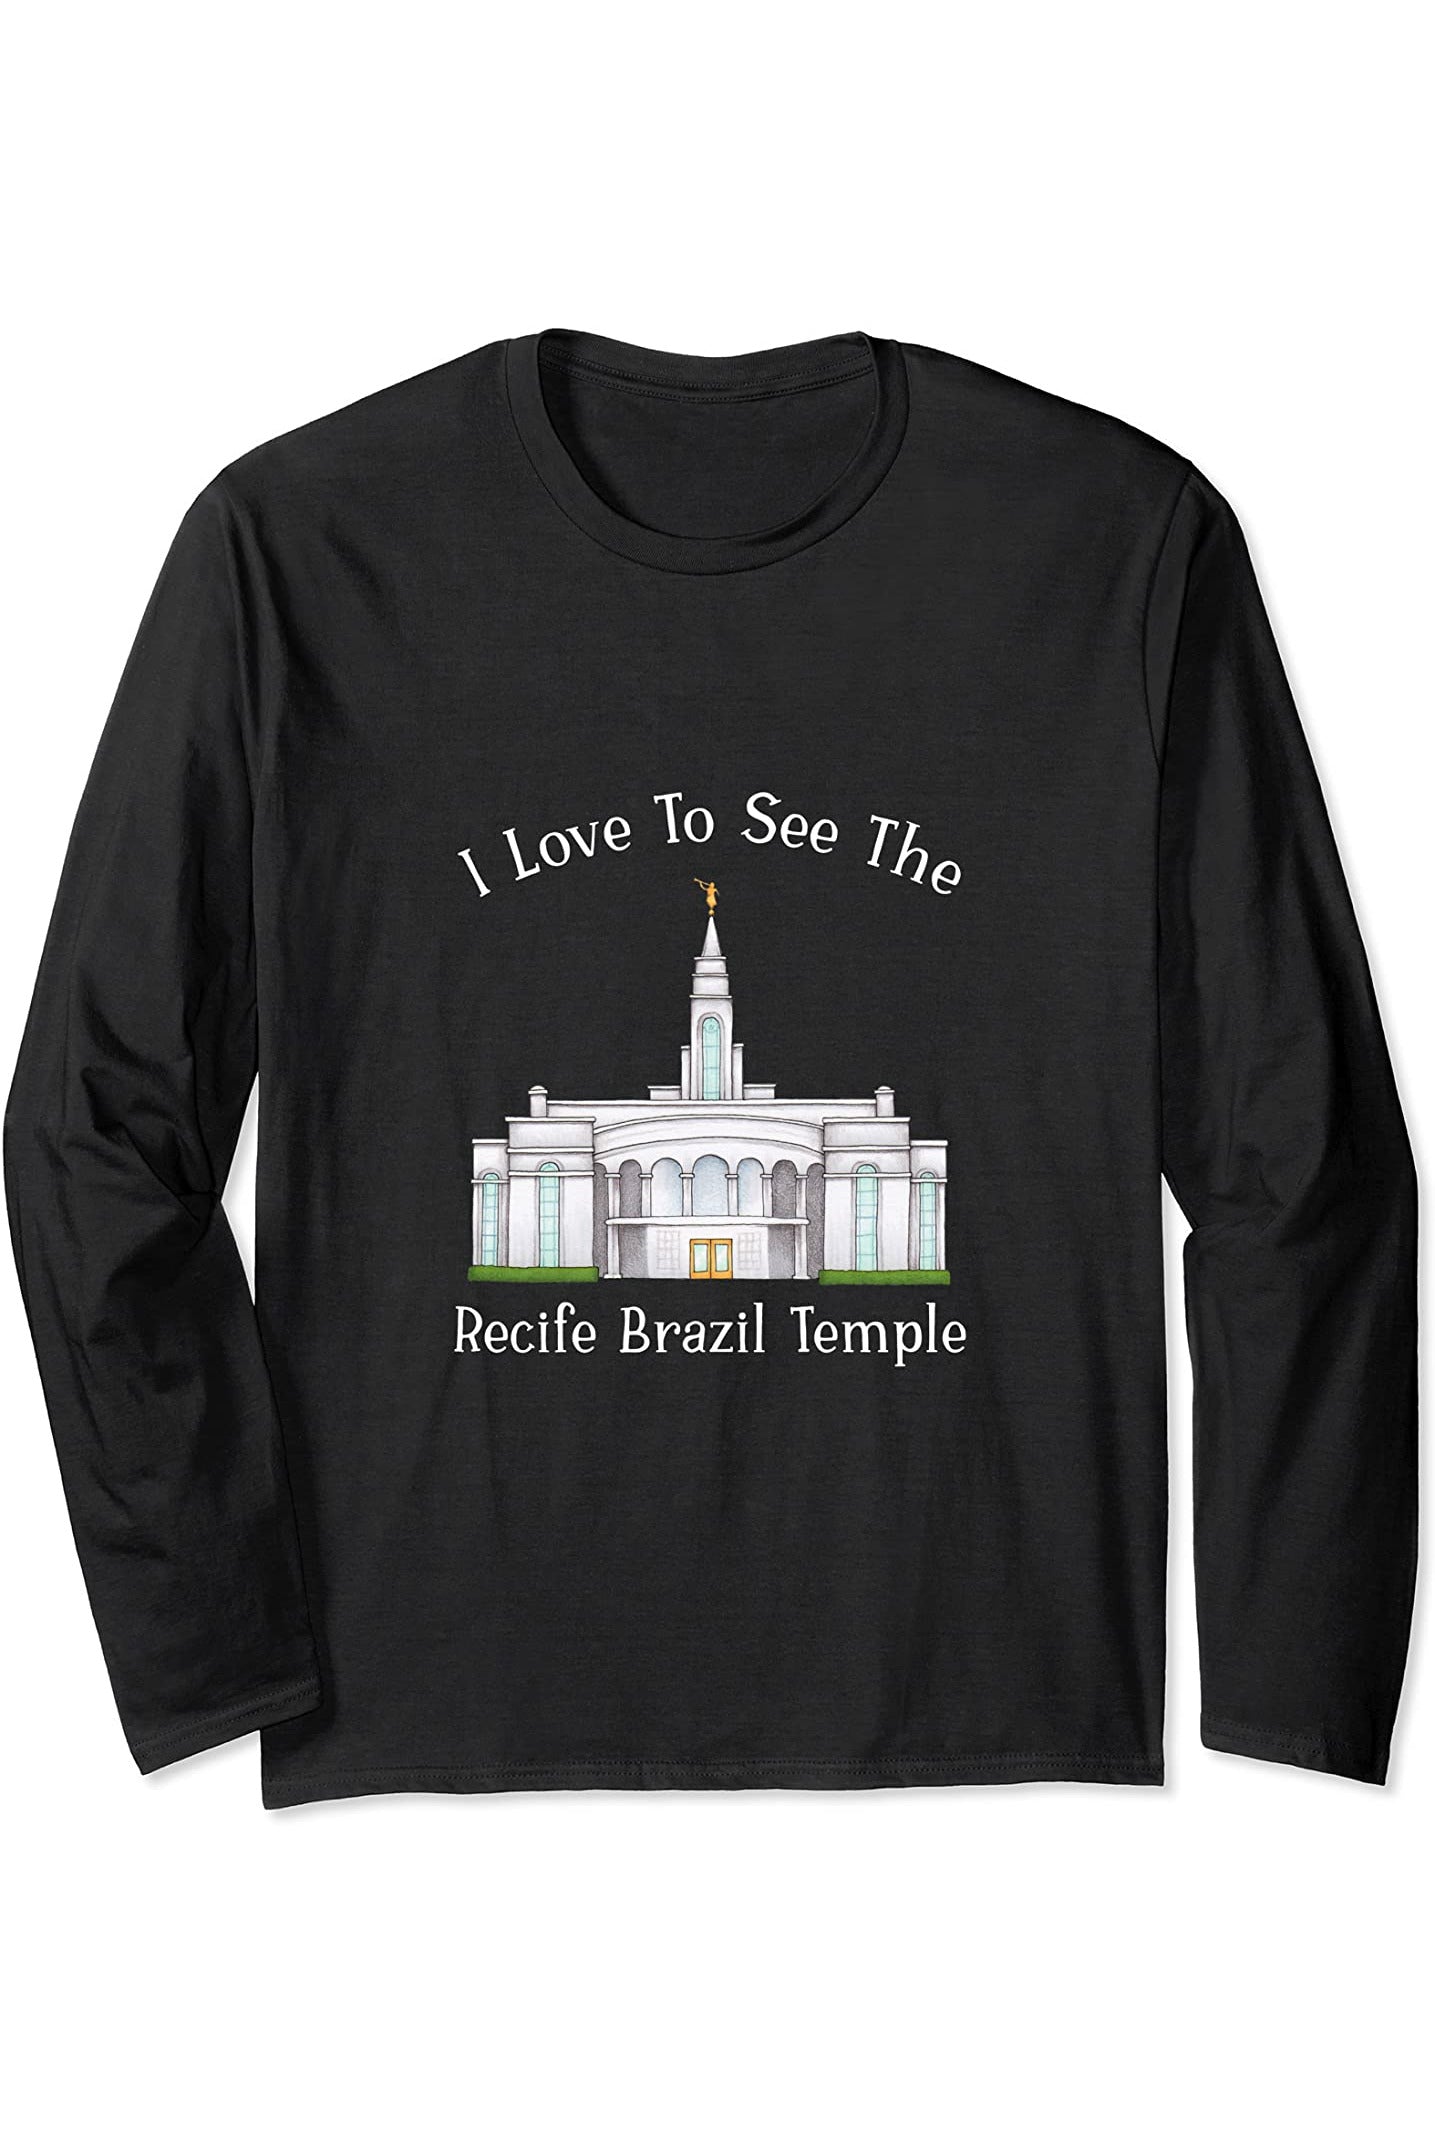 Recife Brazil Temple Long Sleeve T-Shirt - Happy Style (English) US